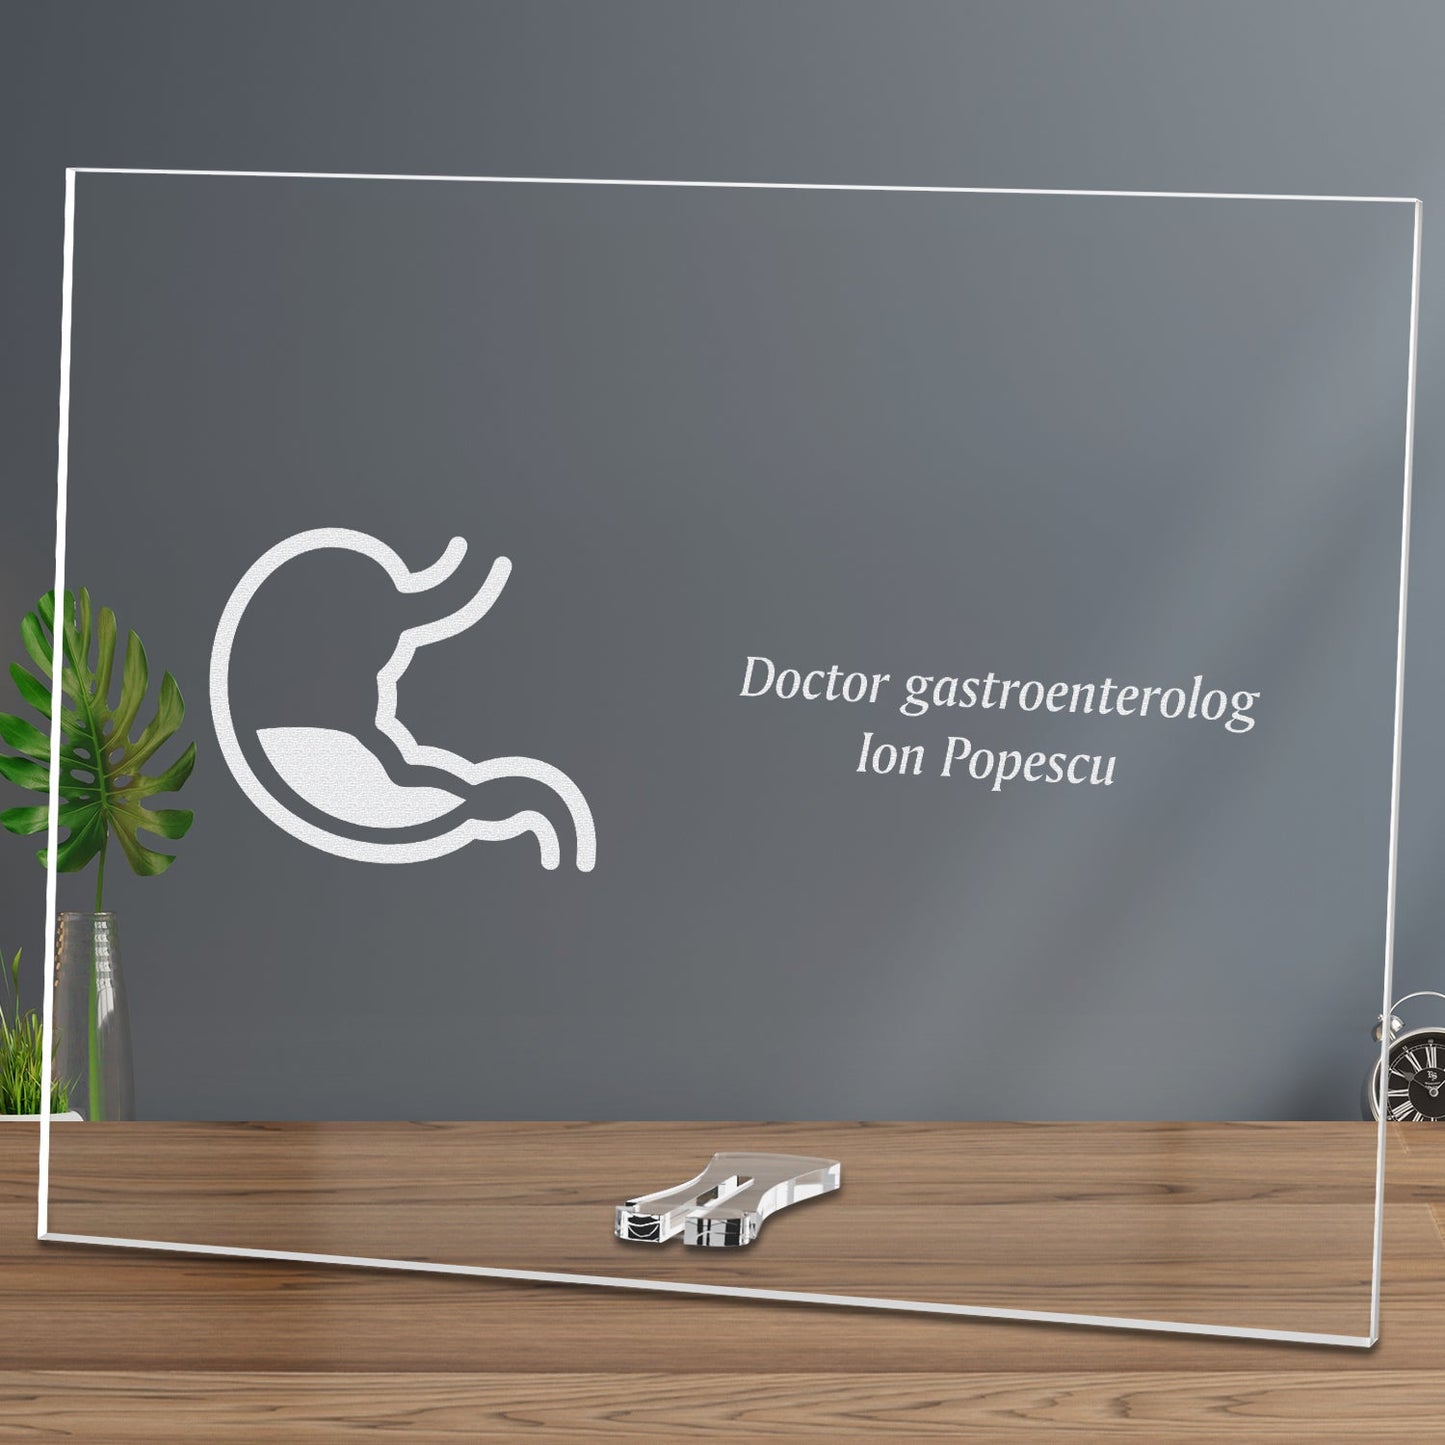 Cadou personalizat placheta din plexiglas - Doctor gastroenterolog - ghizbi.ro